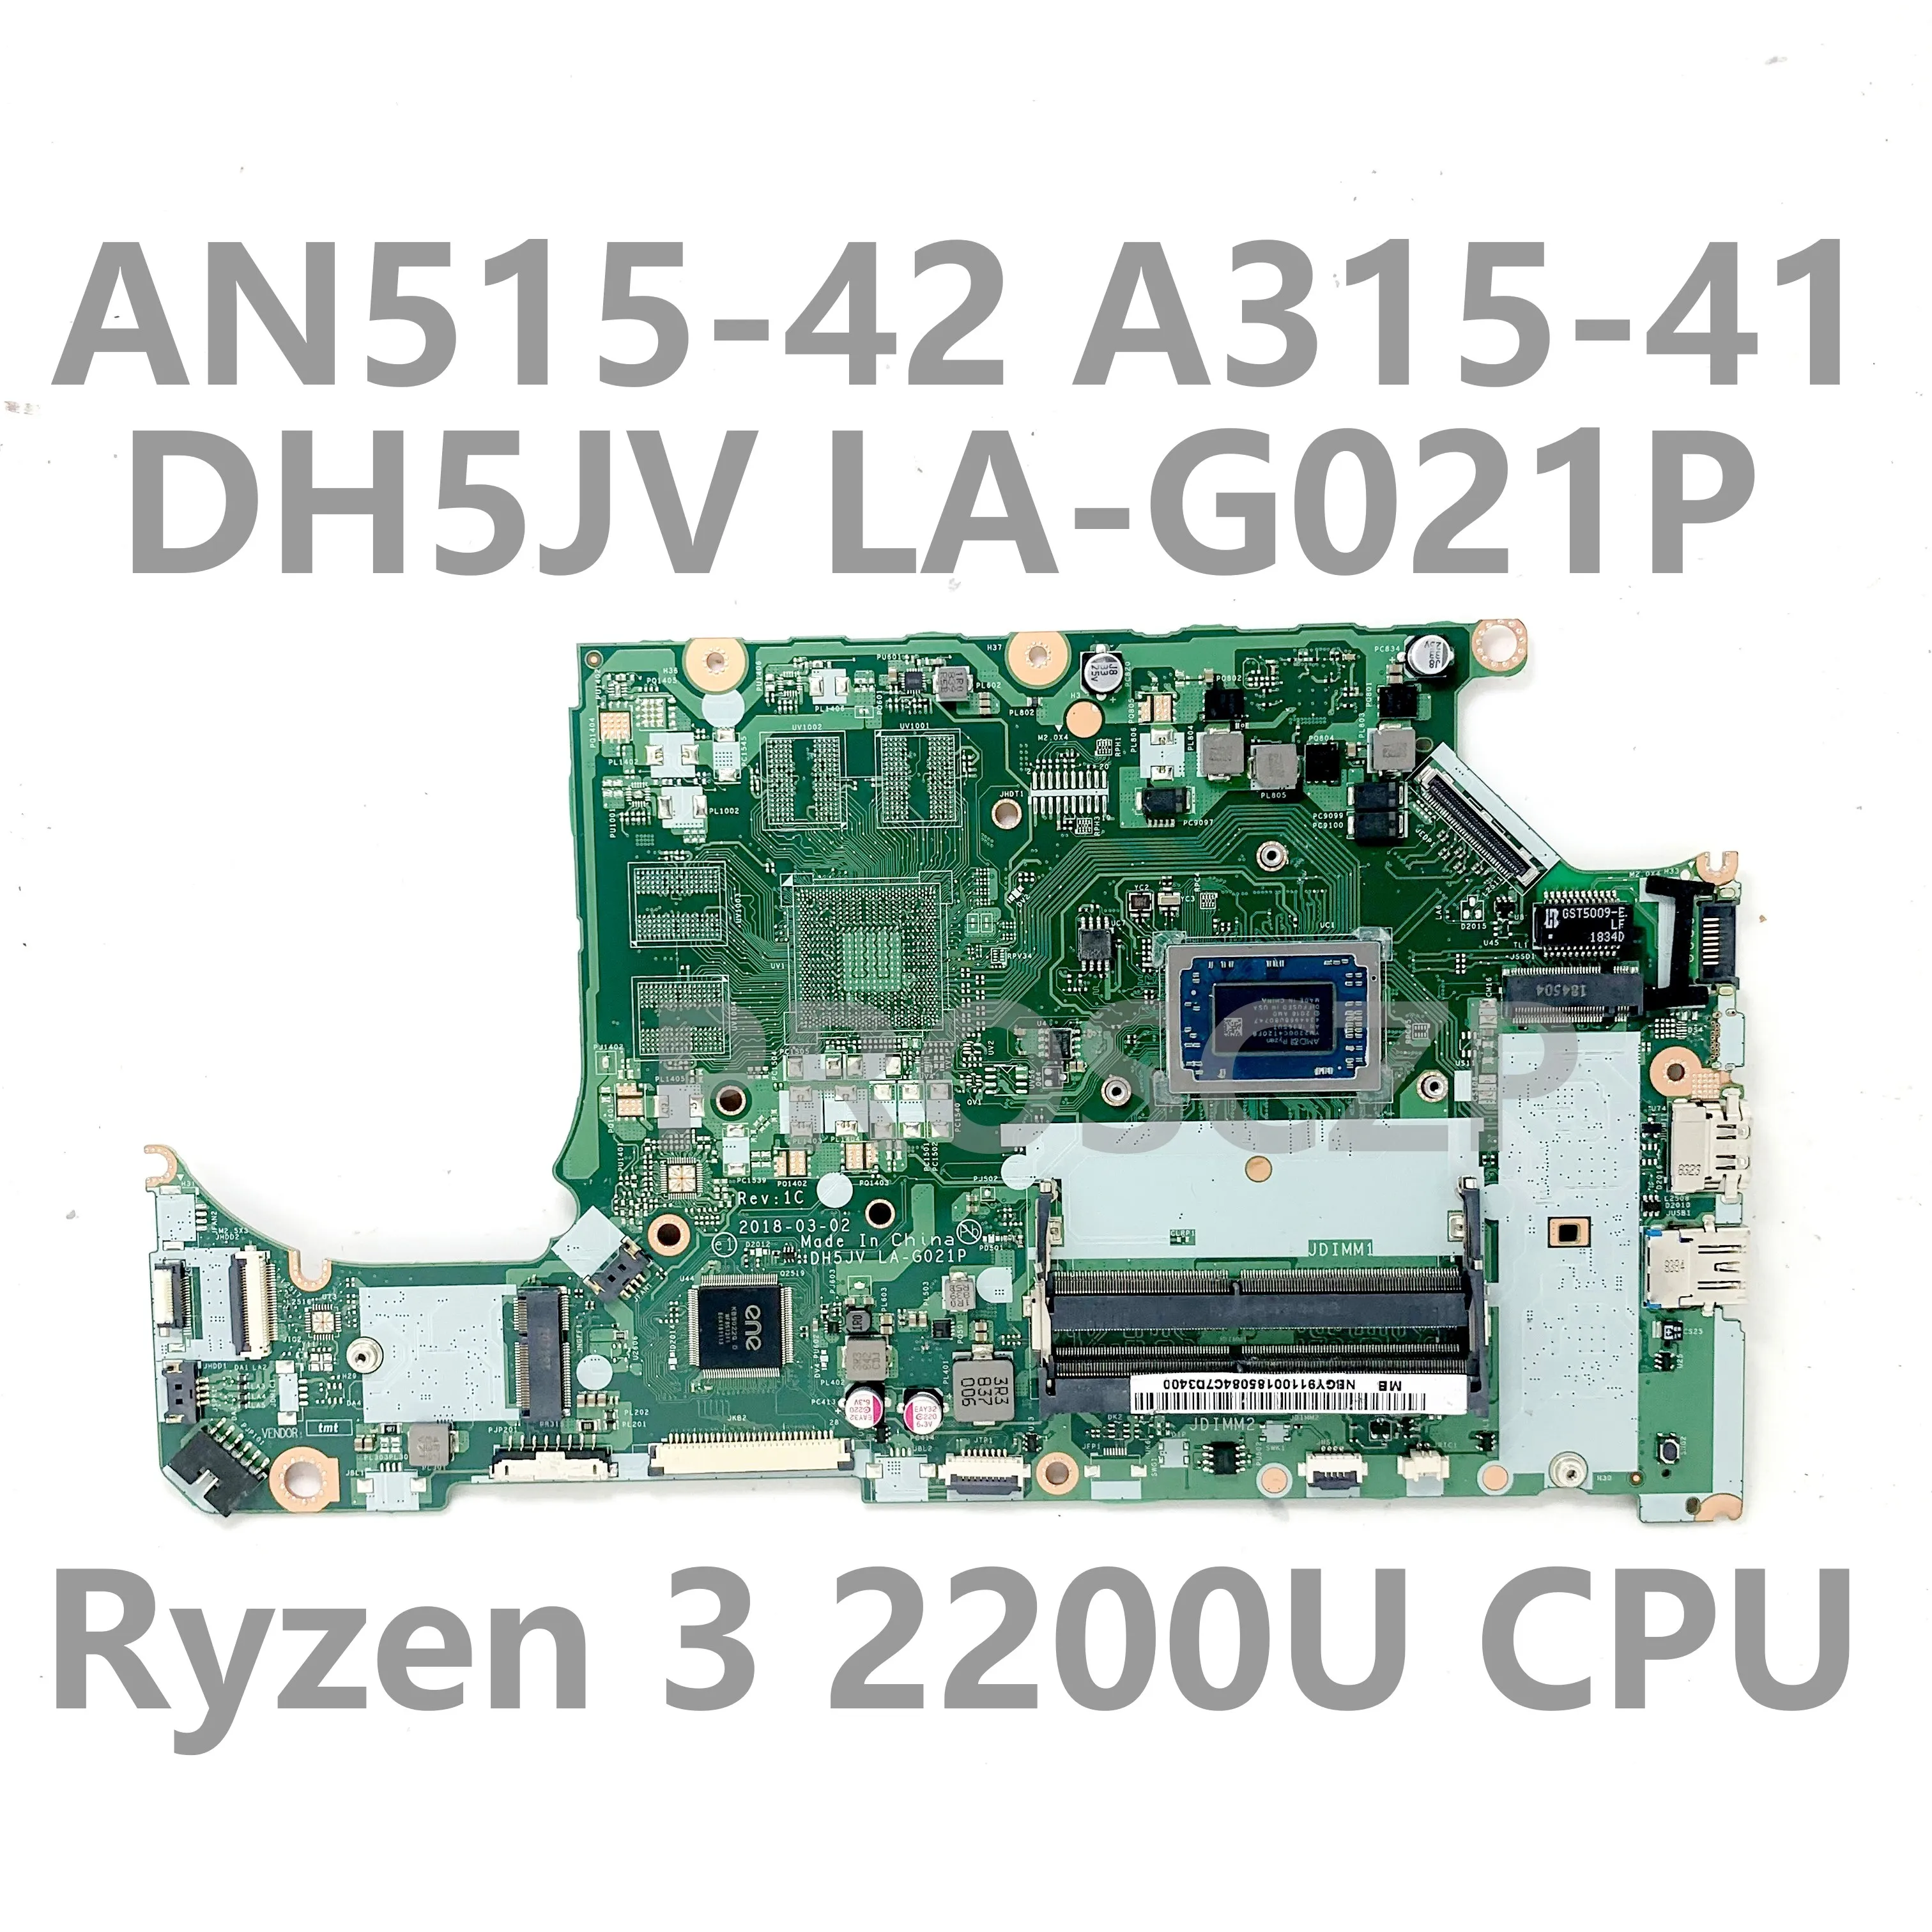 DH5JV LA-G021P висококачествена дънна платка за ACER AN515-42 A315-41 лаптоп дънна платка с процесор Ryzen 3 2200U 100% пълна работа добре